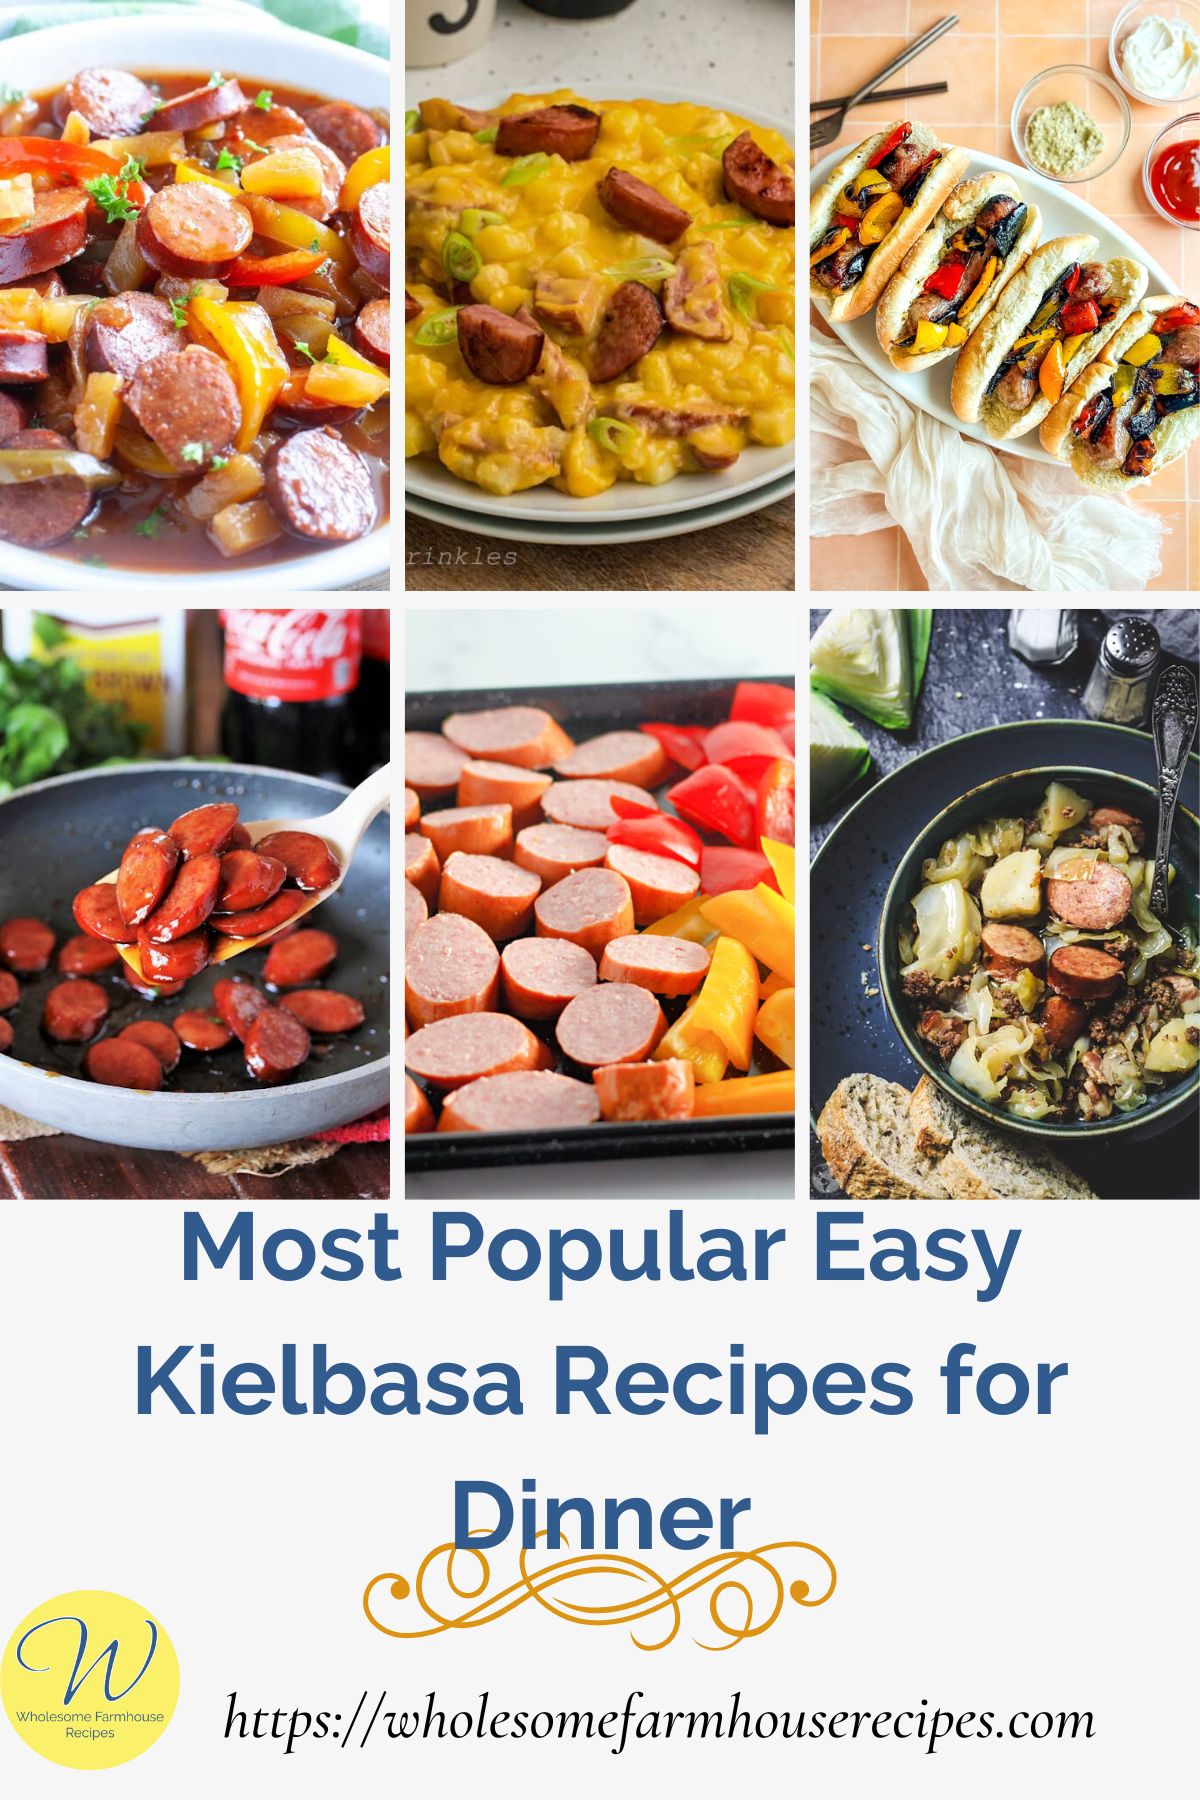 Most Popular Easy Kielbasa Recipes for Dinner